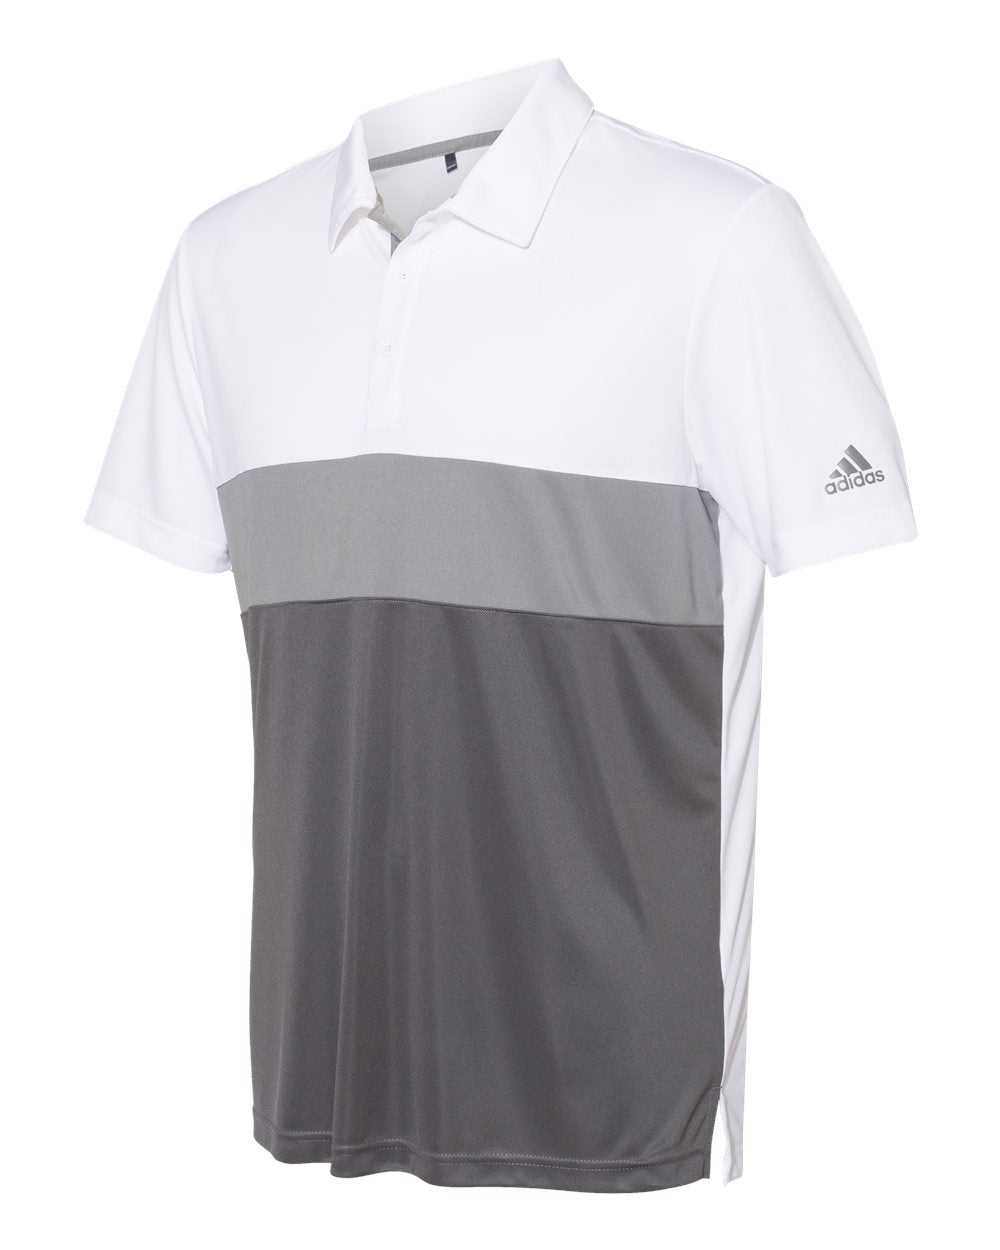 Adidas A236 Merch Block Sport Shirt - White Grey Three Grey Five - HIT a Double